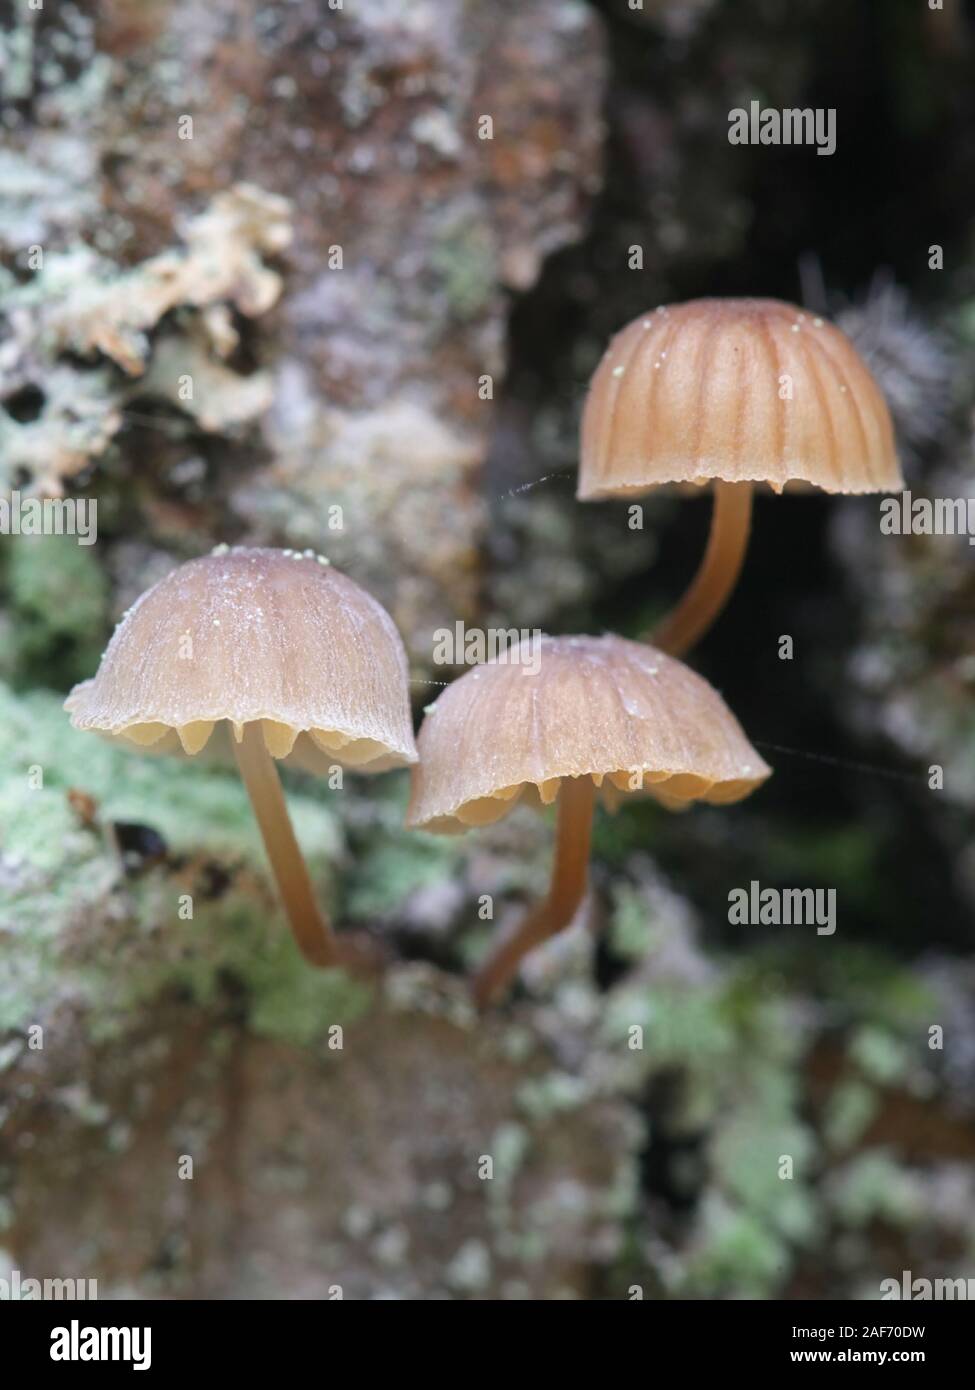 Mycena meliigena, a bonnet mushroom growing on oak trunk Stock Photo